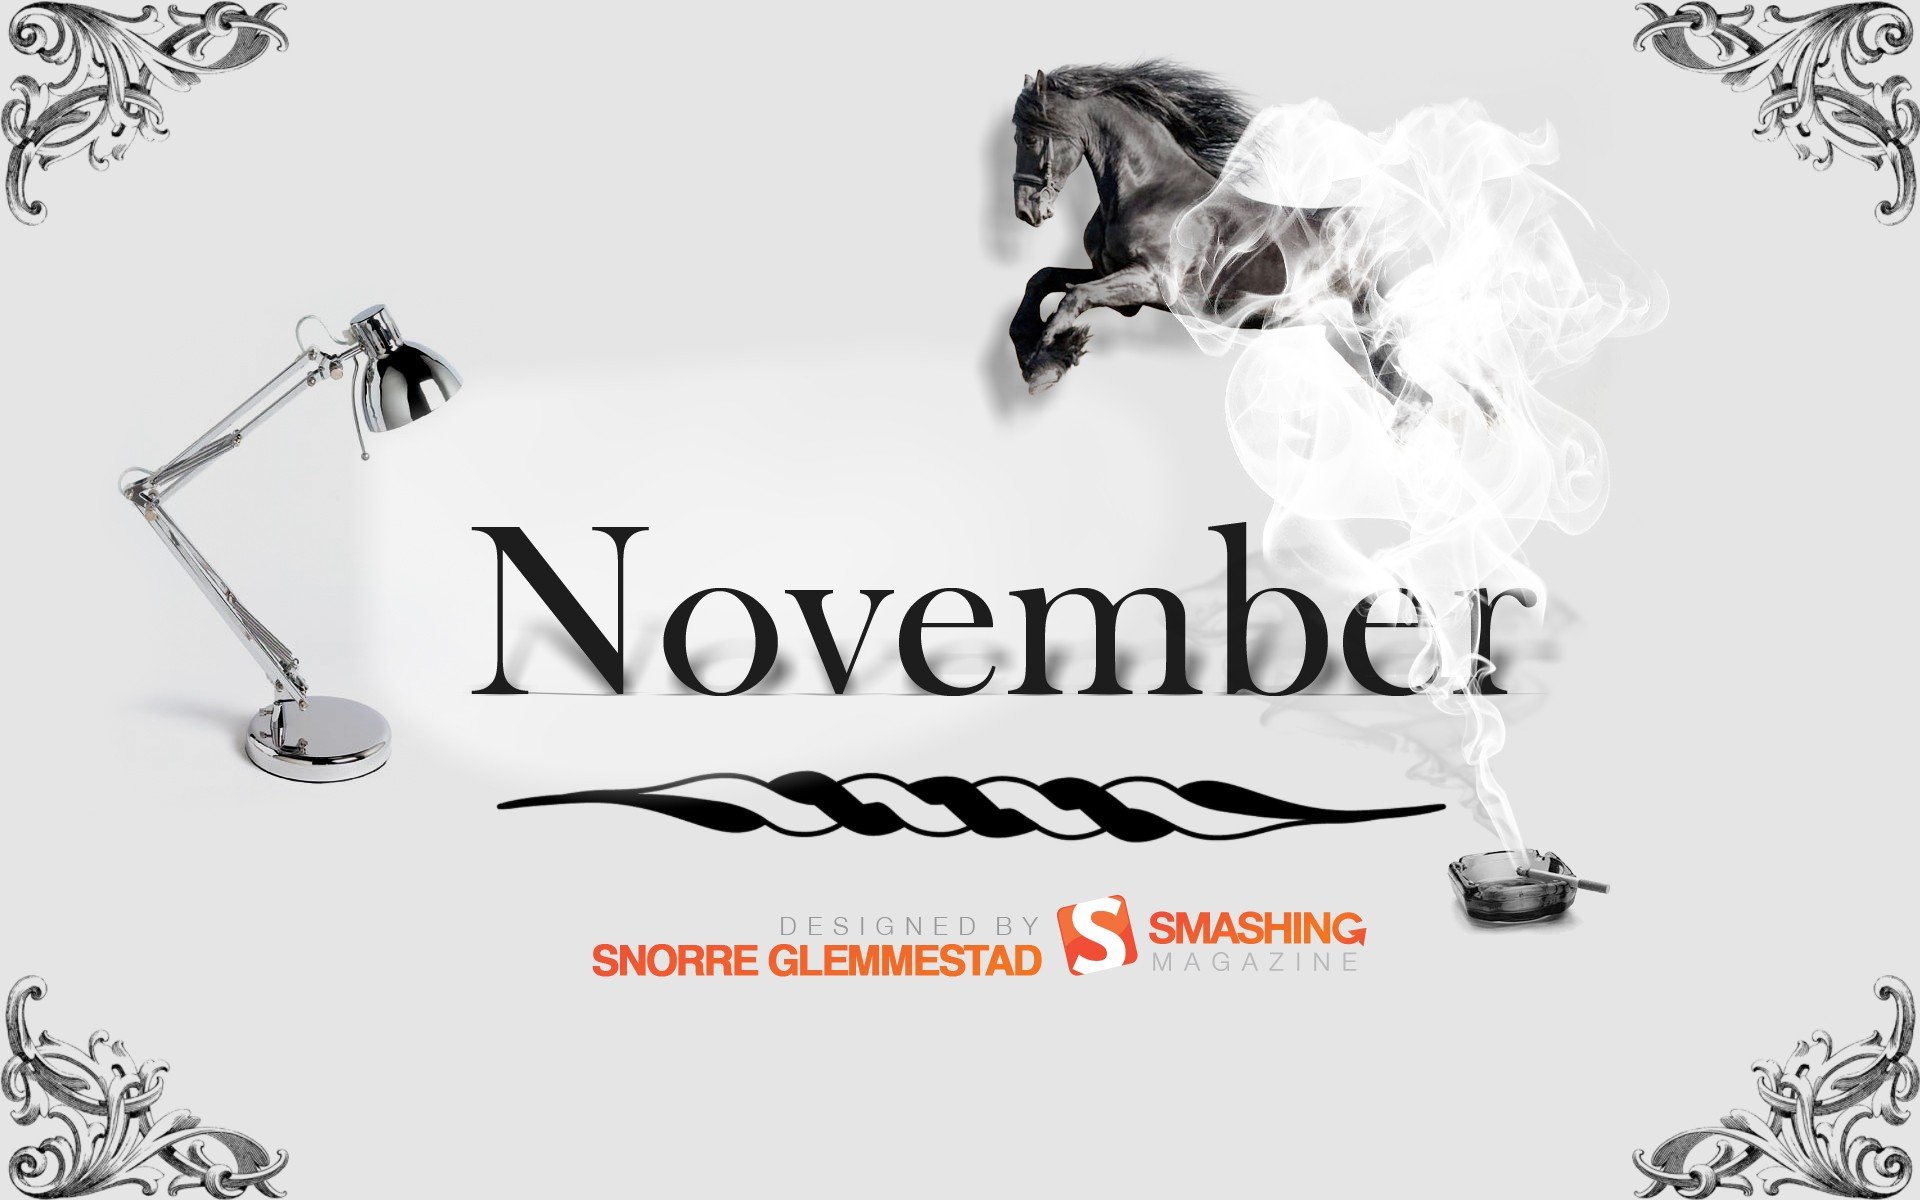 smoke, Horses, November, Smashing, Magazine Wallpapers HD / Desktop and